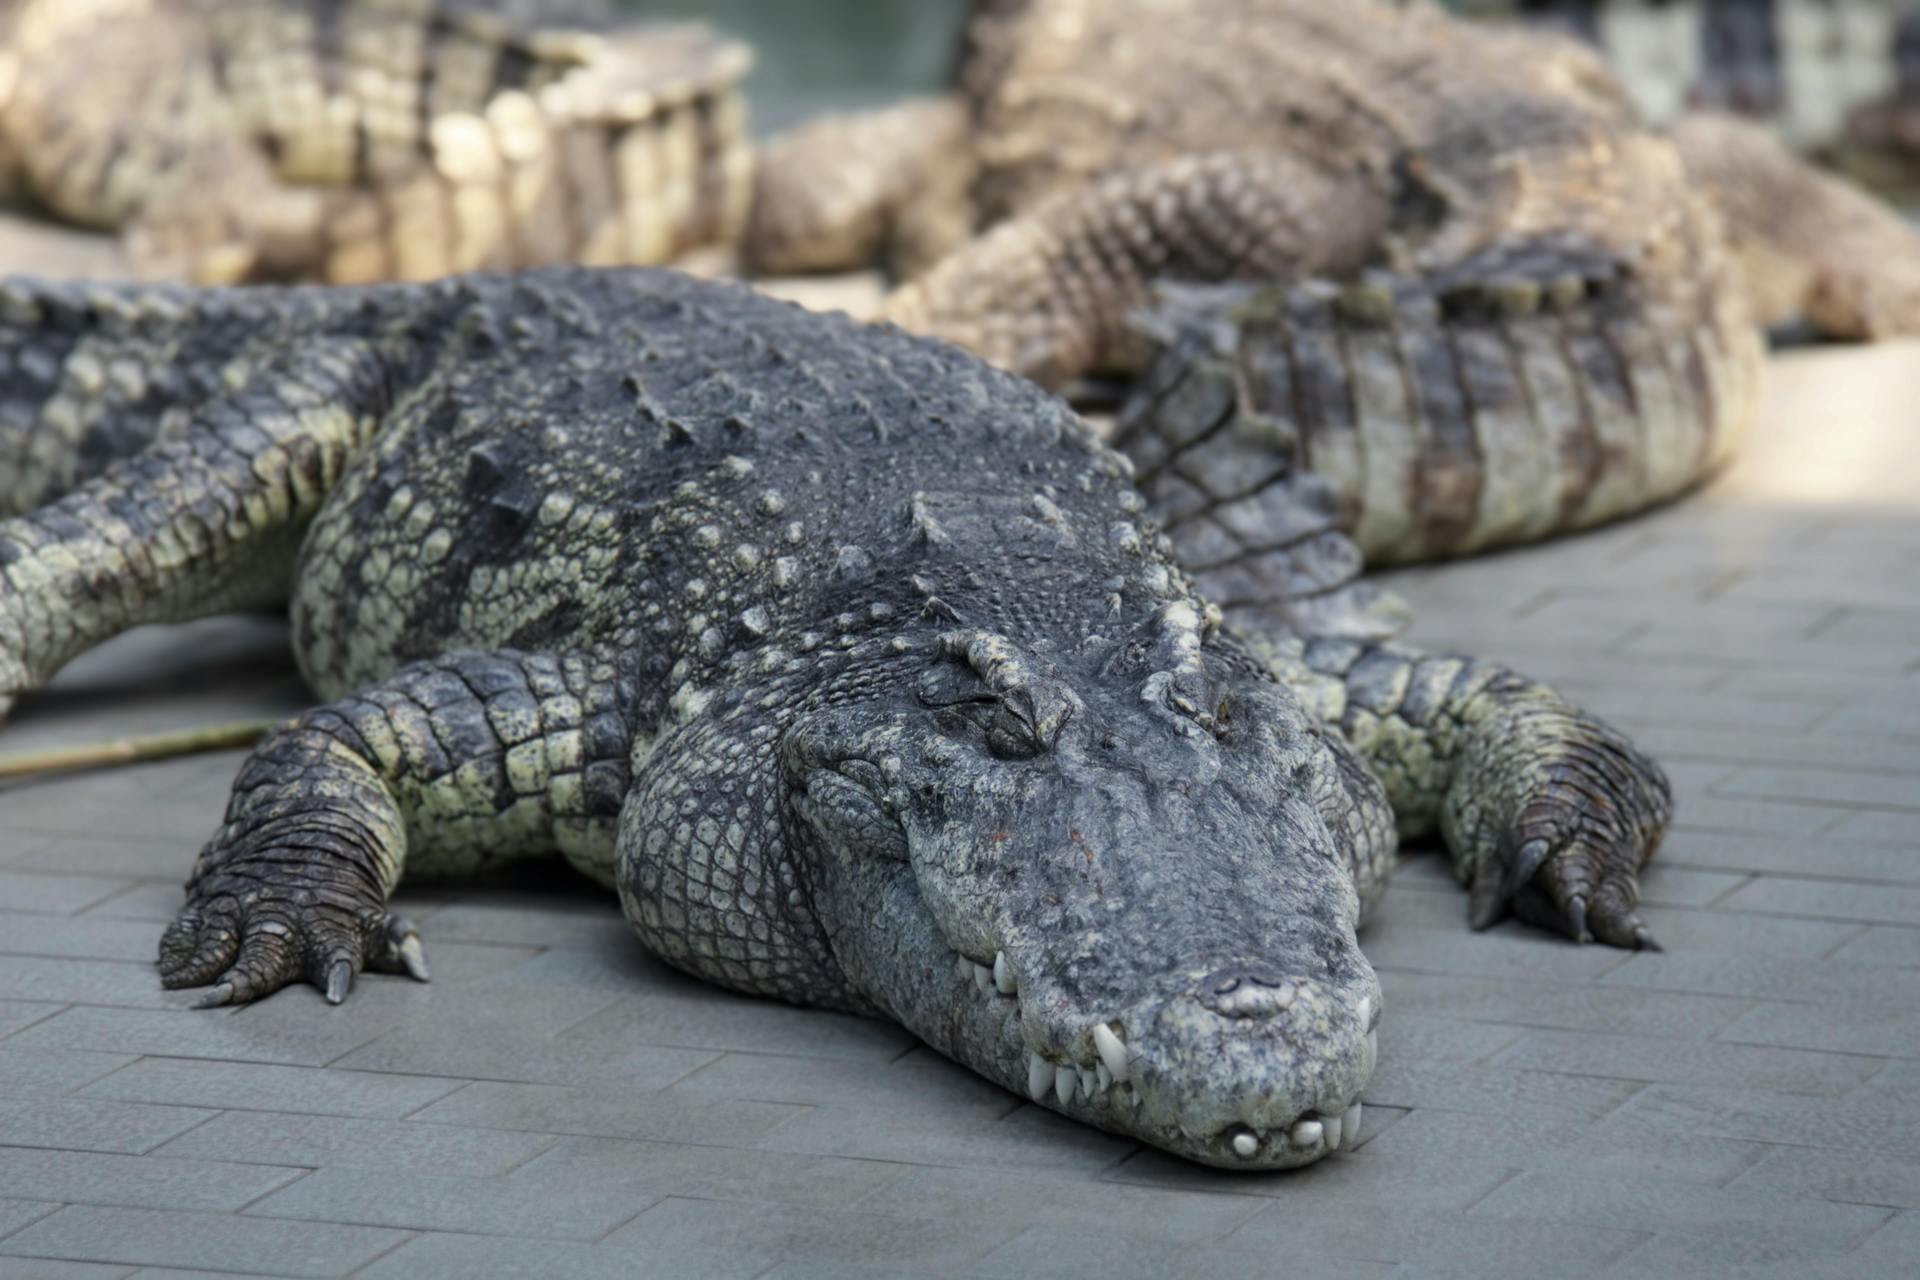 Nile Crocodile on Gray Concrete Floor